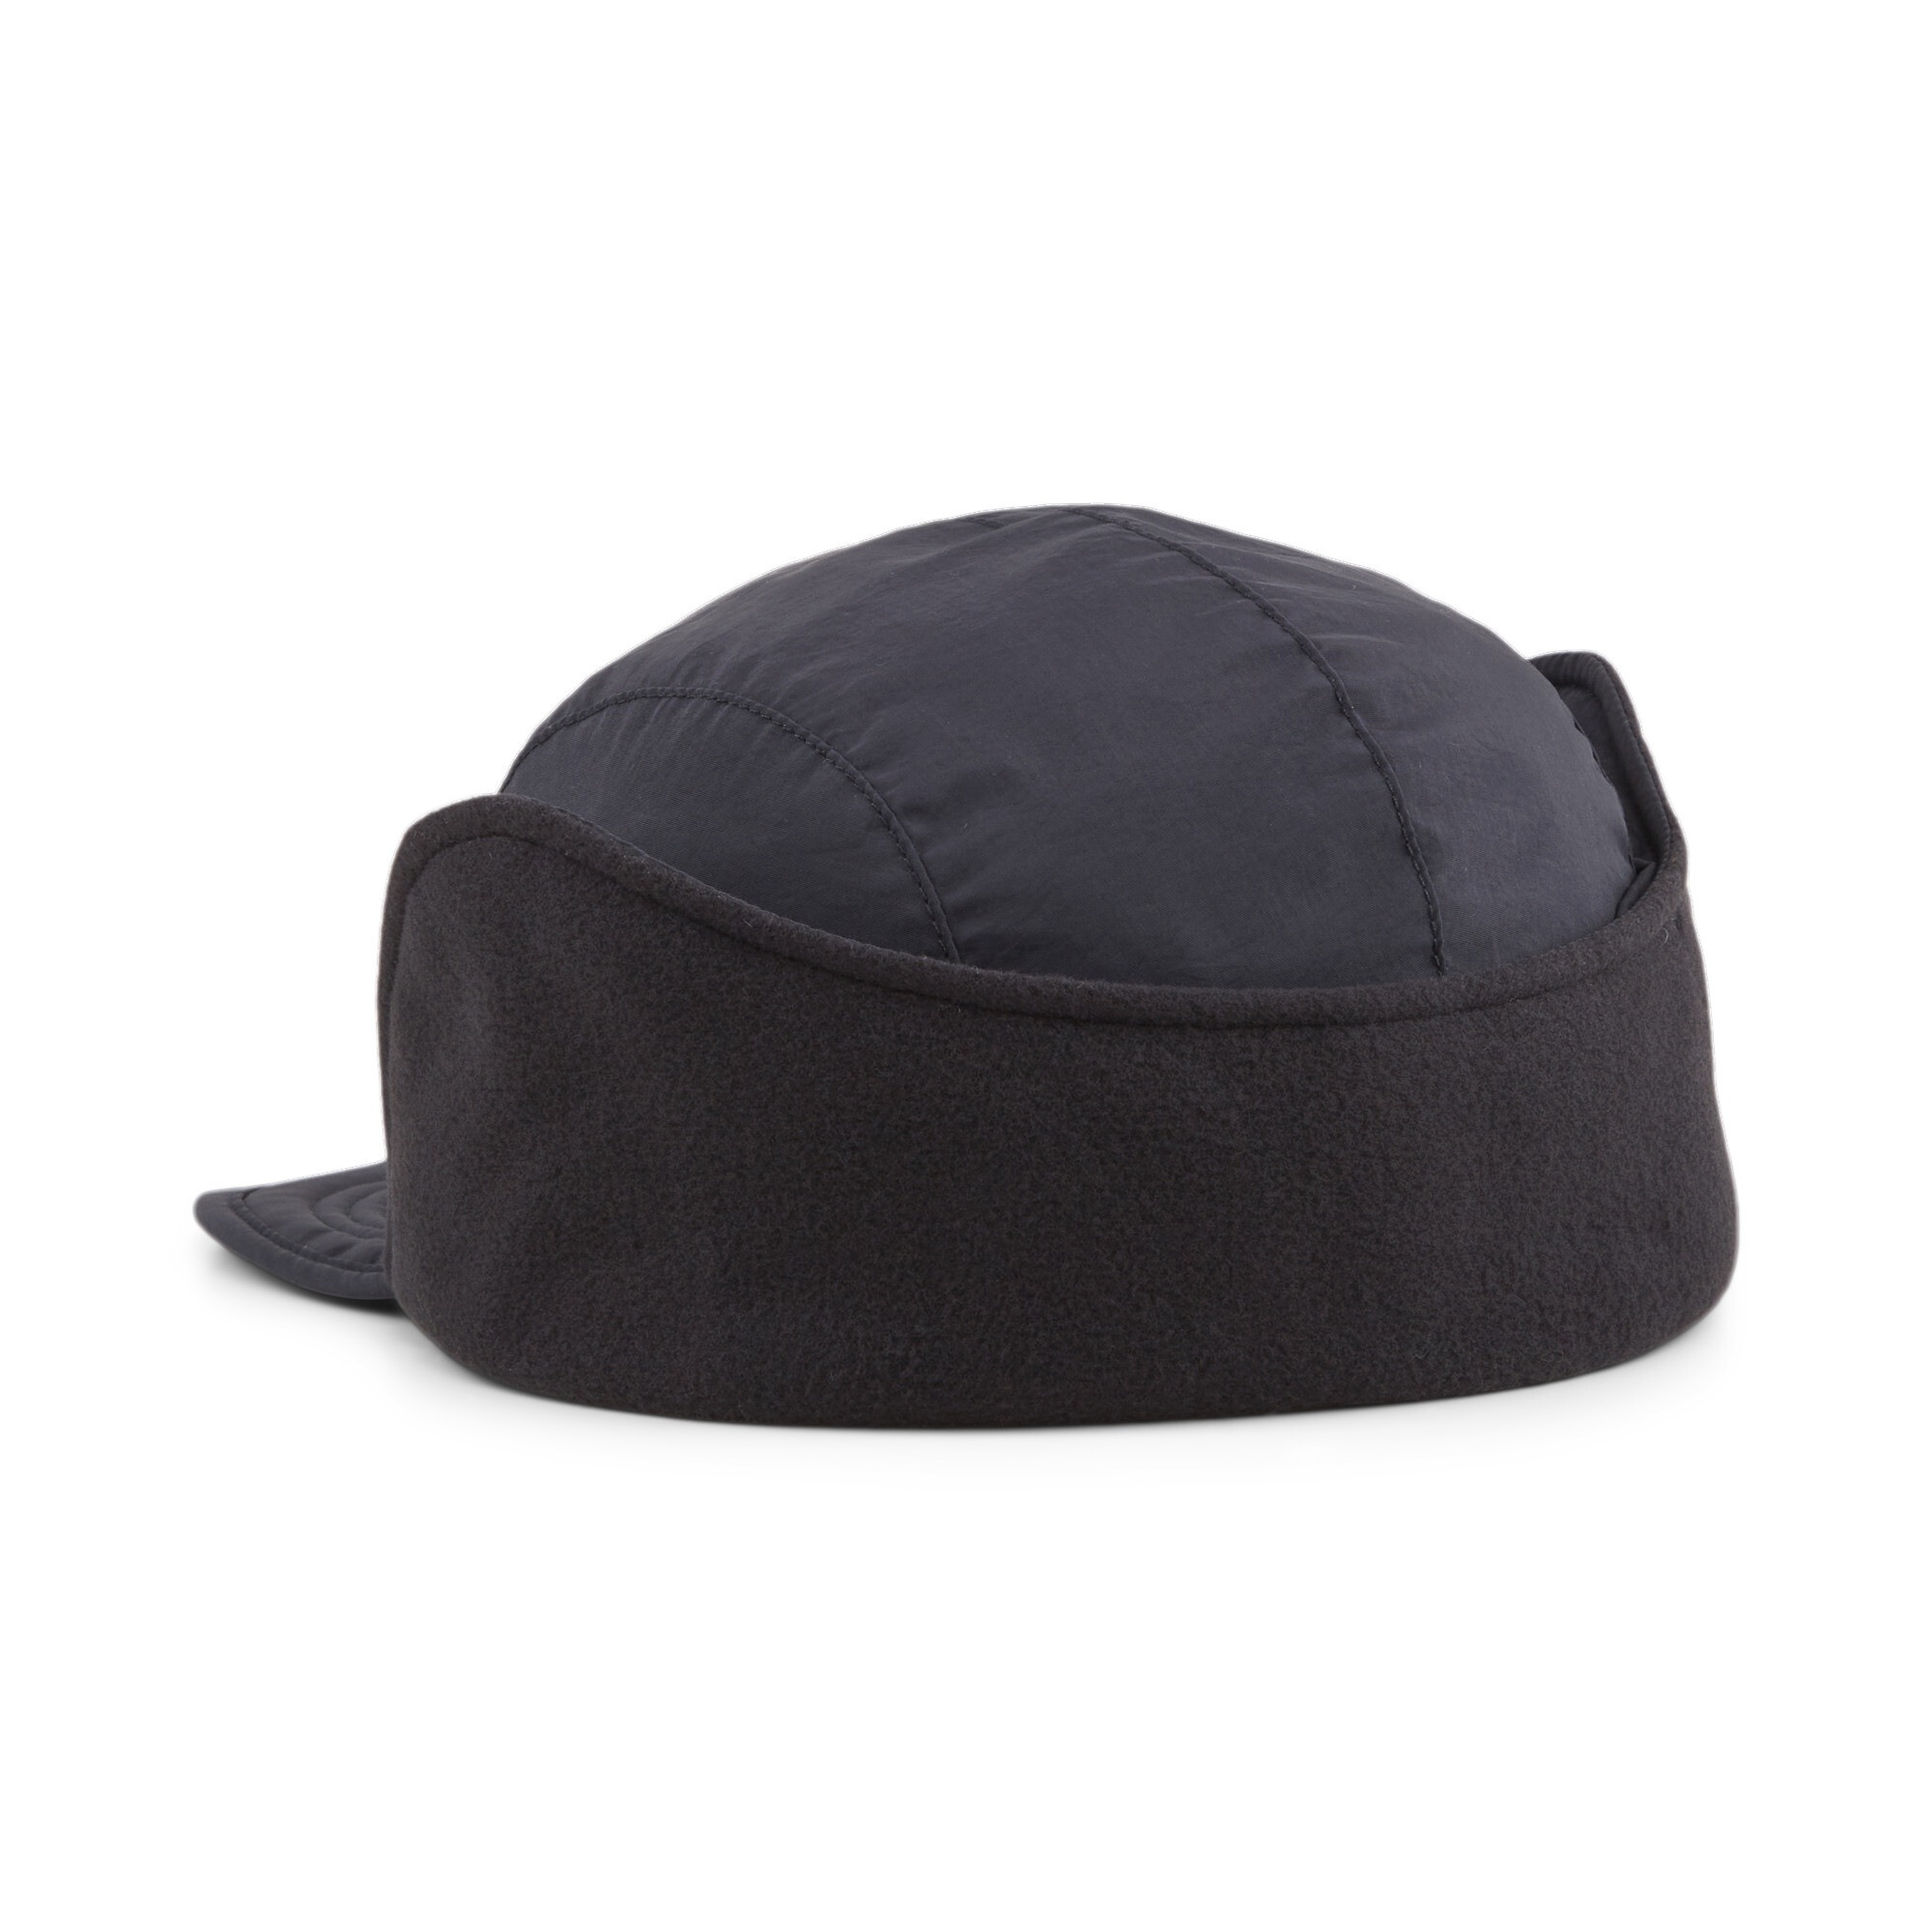 Puma SEASONS Winter Cap, Black, Size L/XL, Accessories